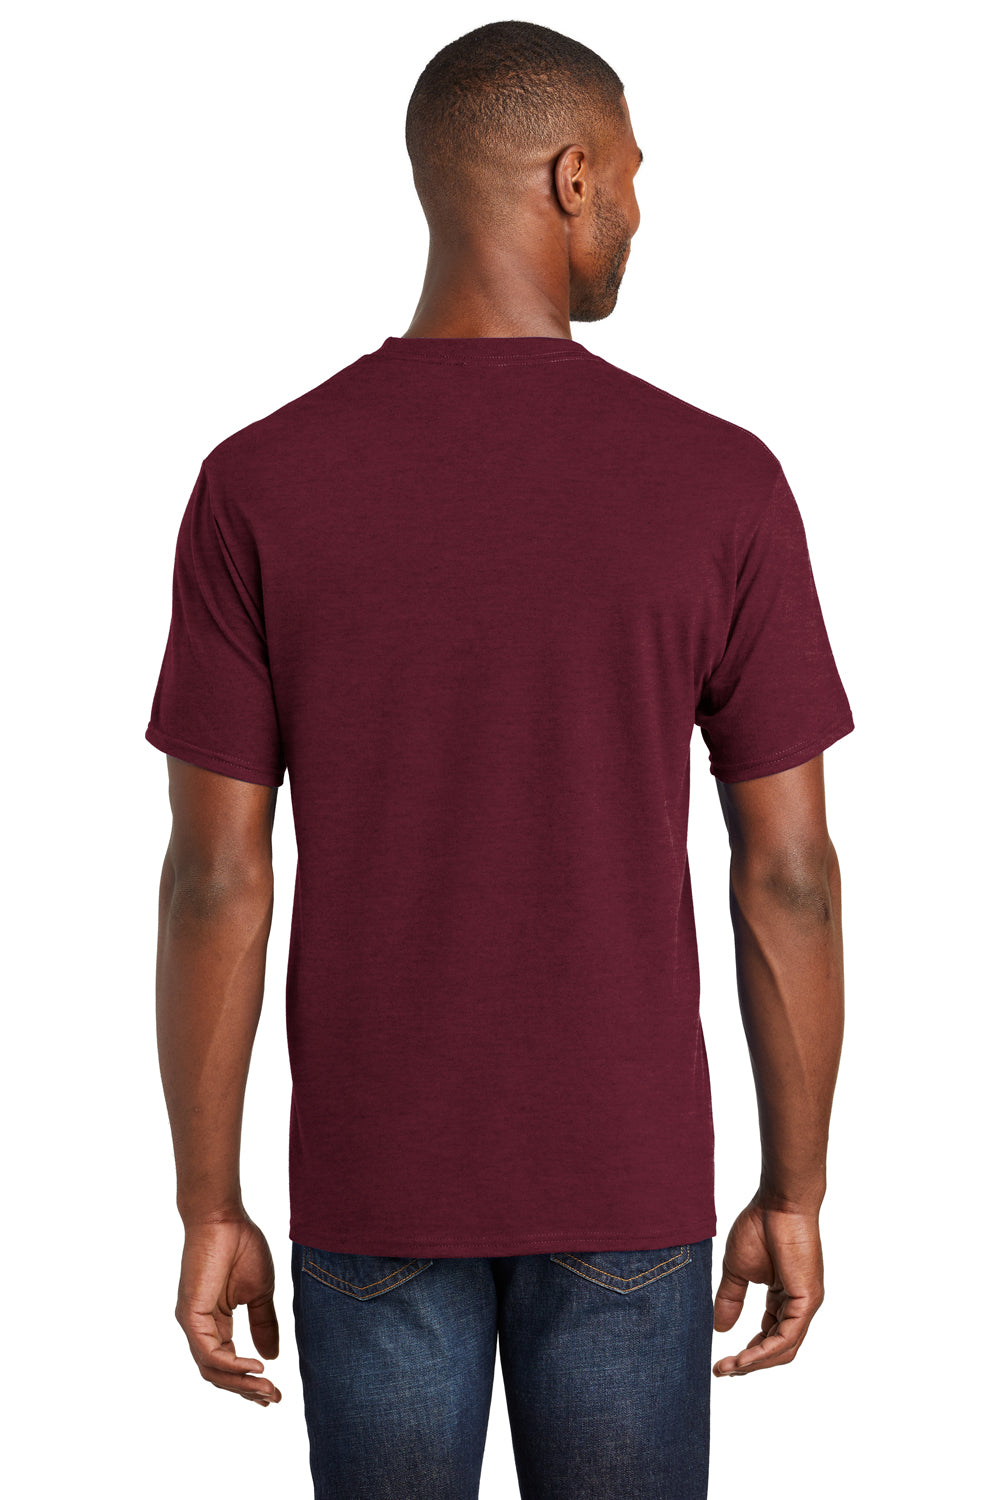 Port & Company PC450 Mens Fan Favorite Short Sleeve Crewneck T-Shirt Maroon Back